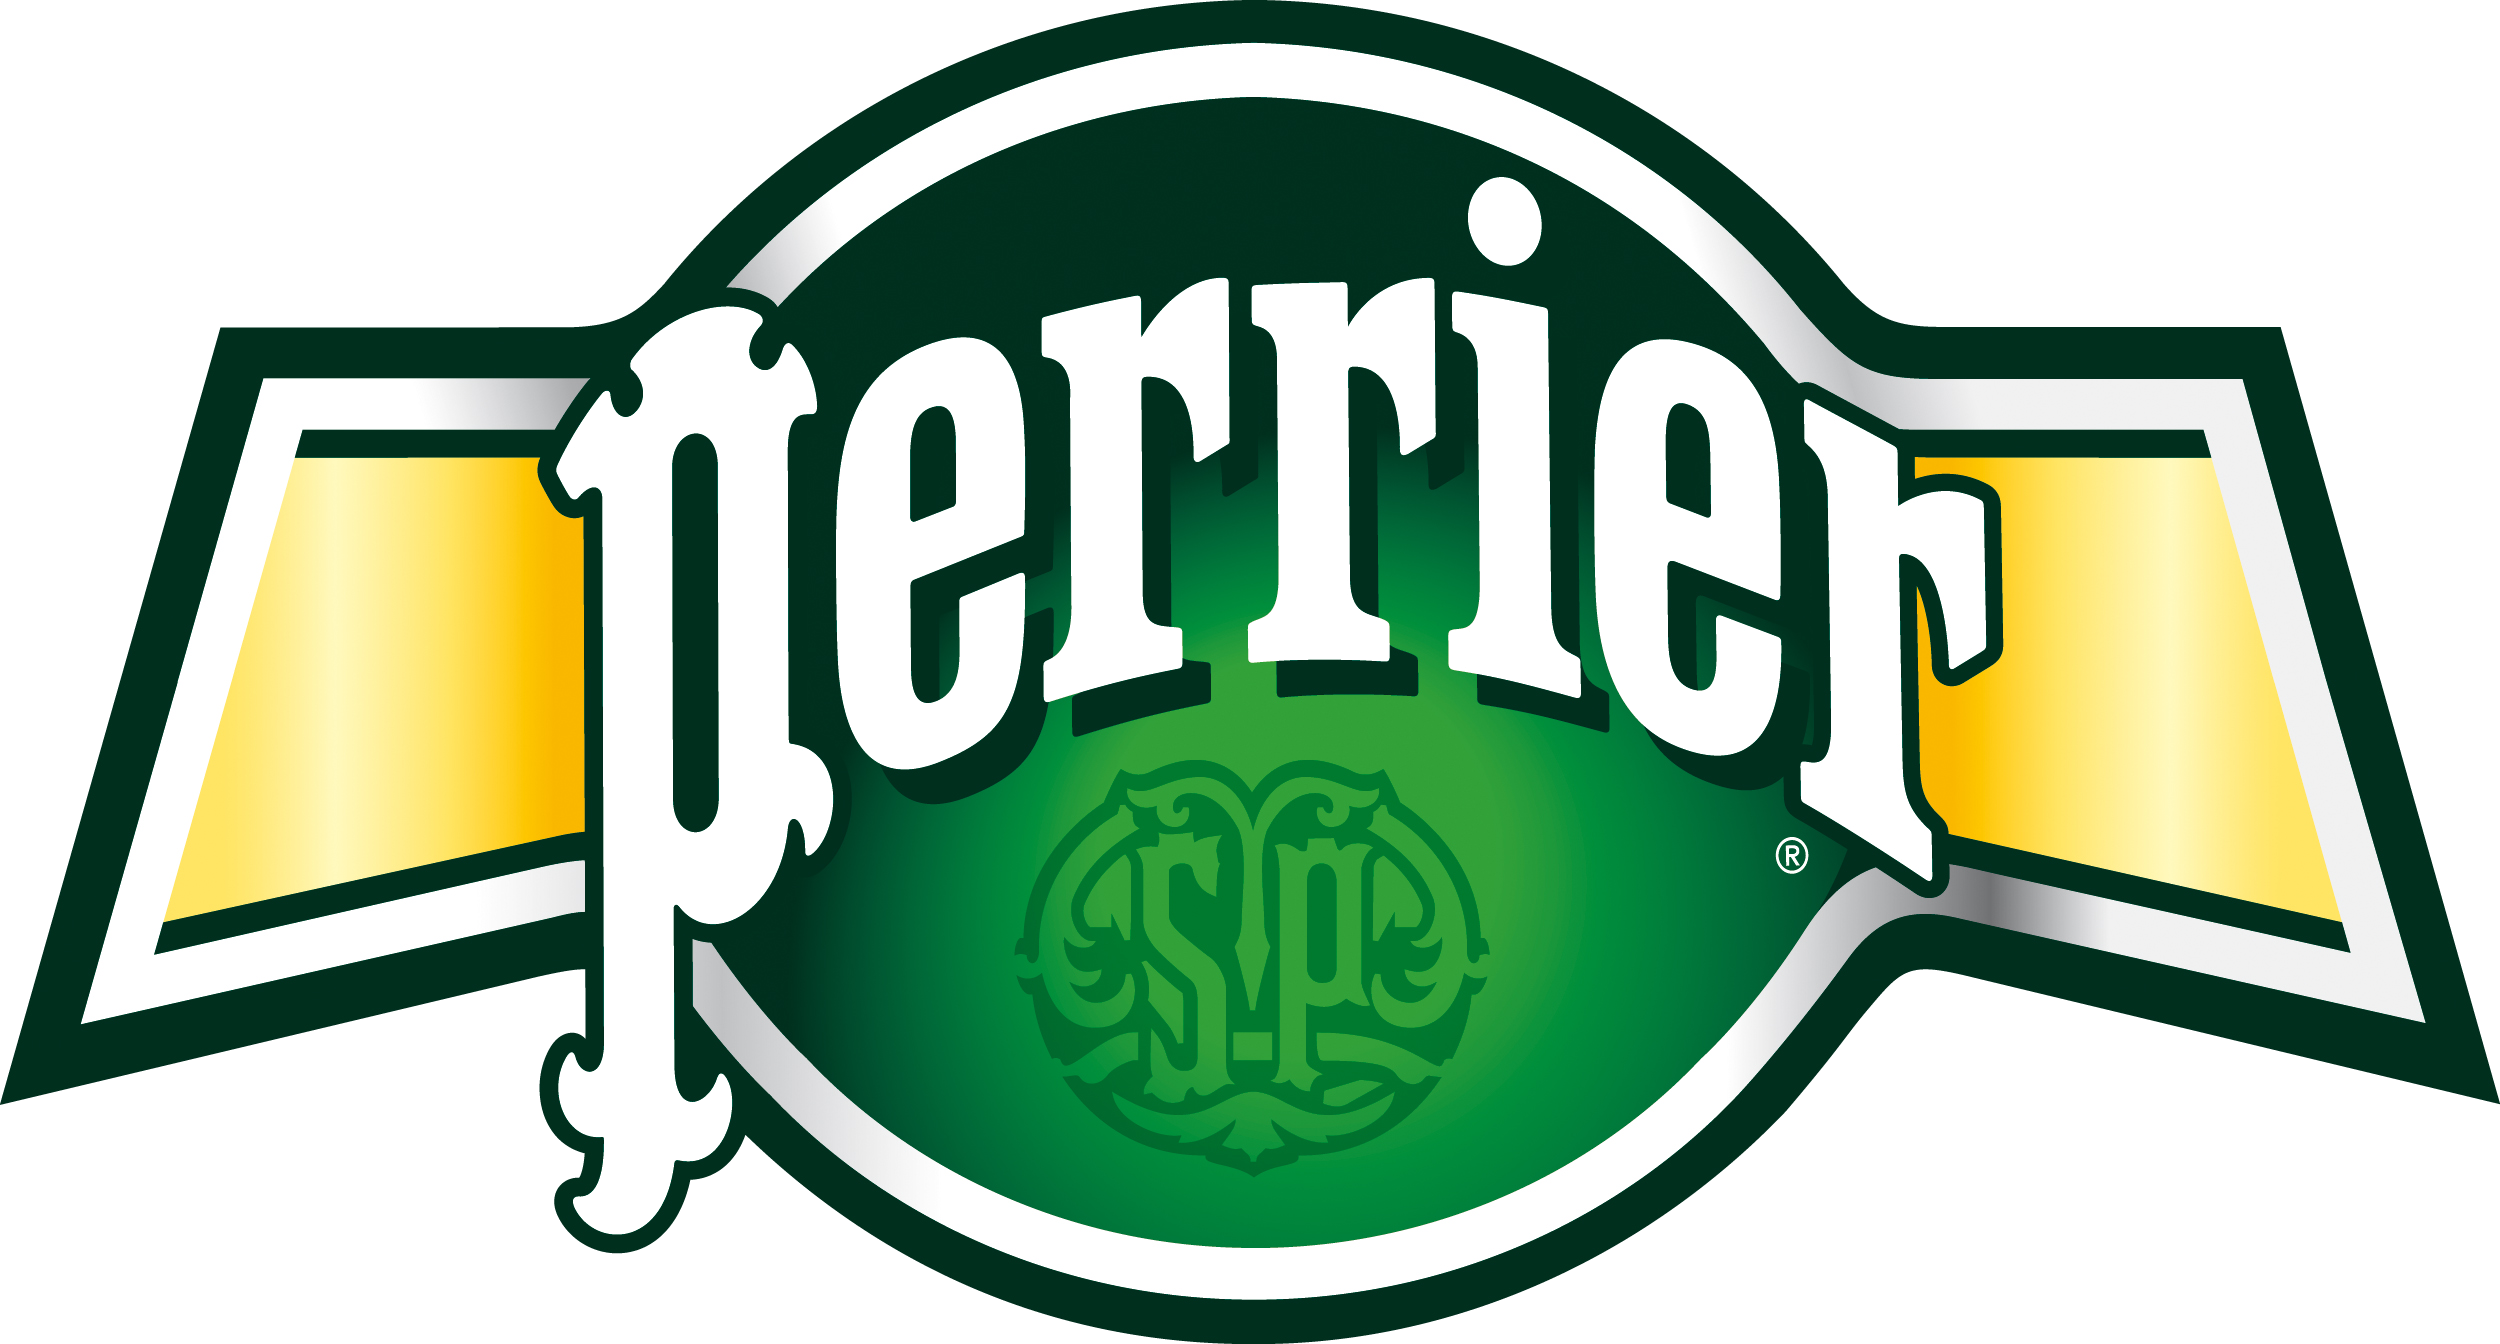 Perrier_logo